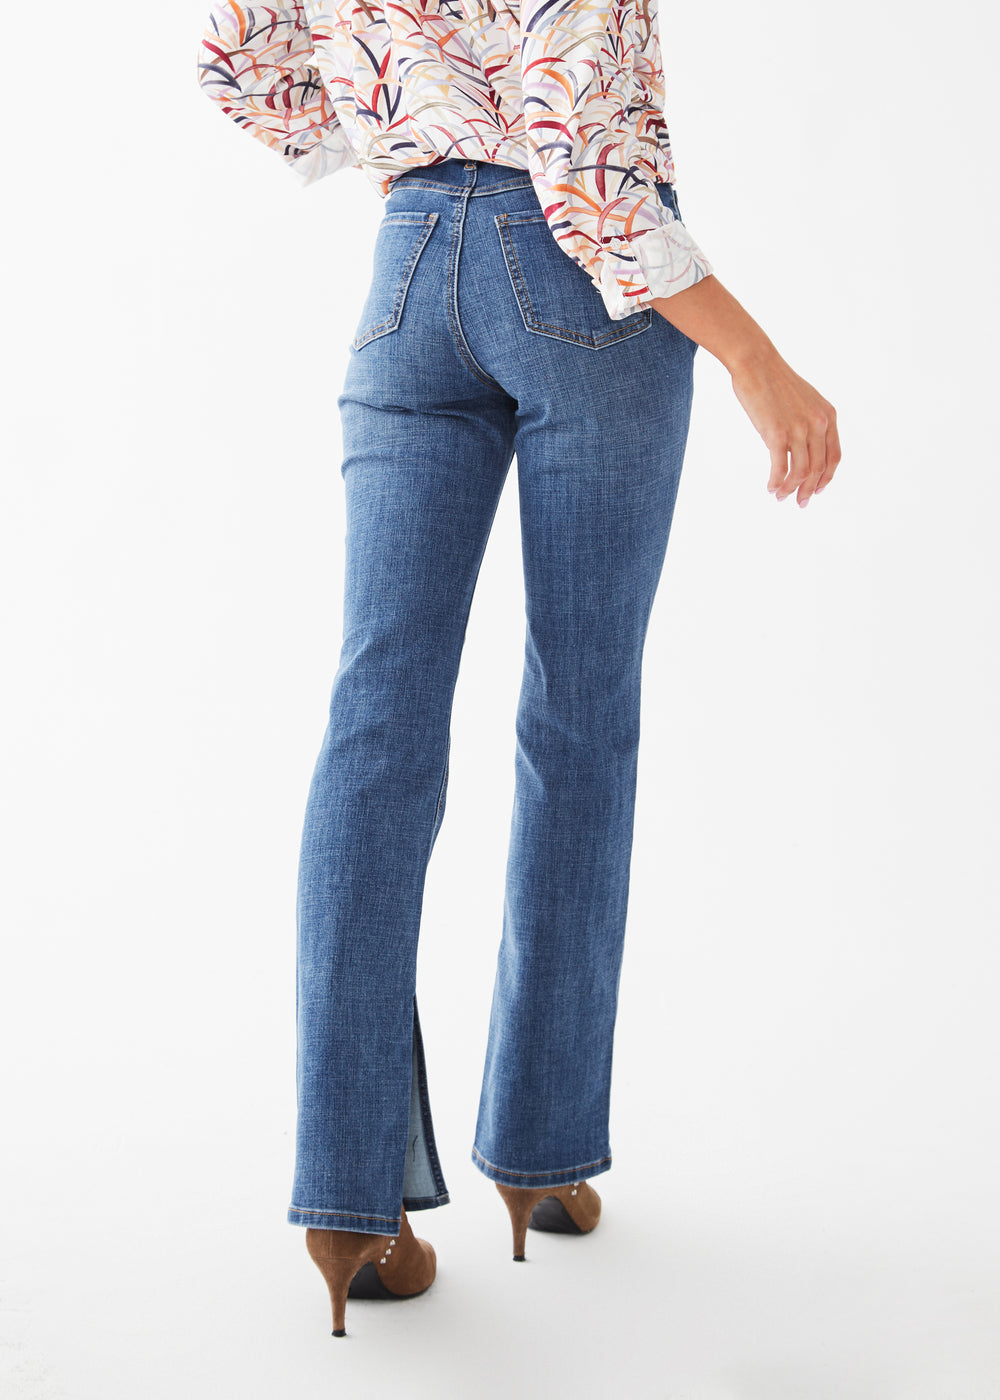 FDJ Olivia bootcut jeans 2182809, side-slit hem SALE 4, 6